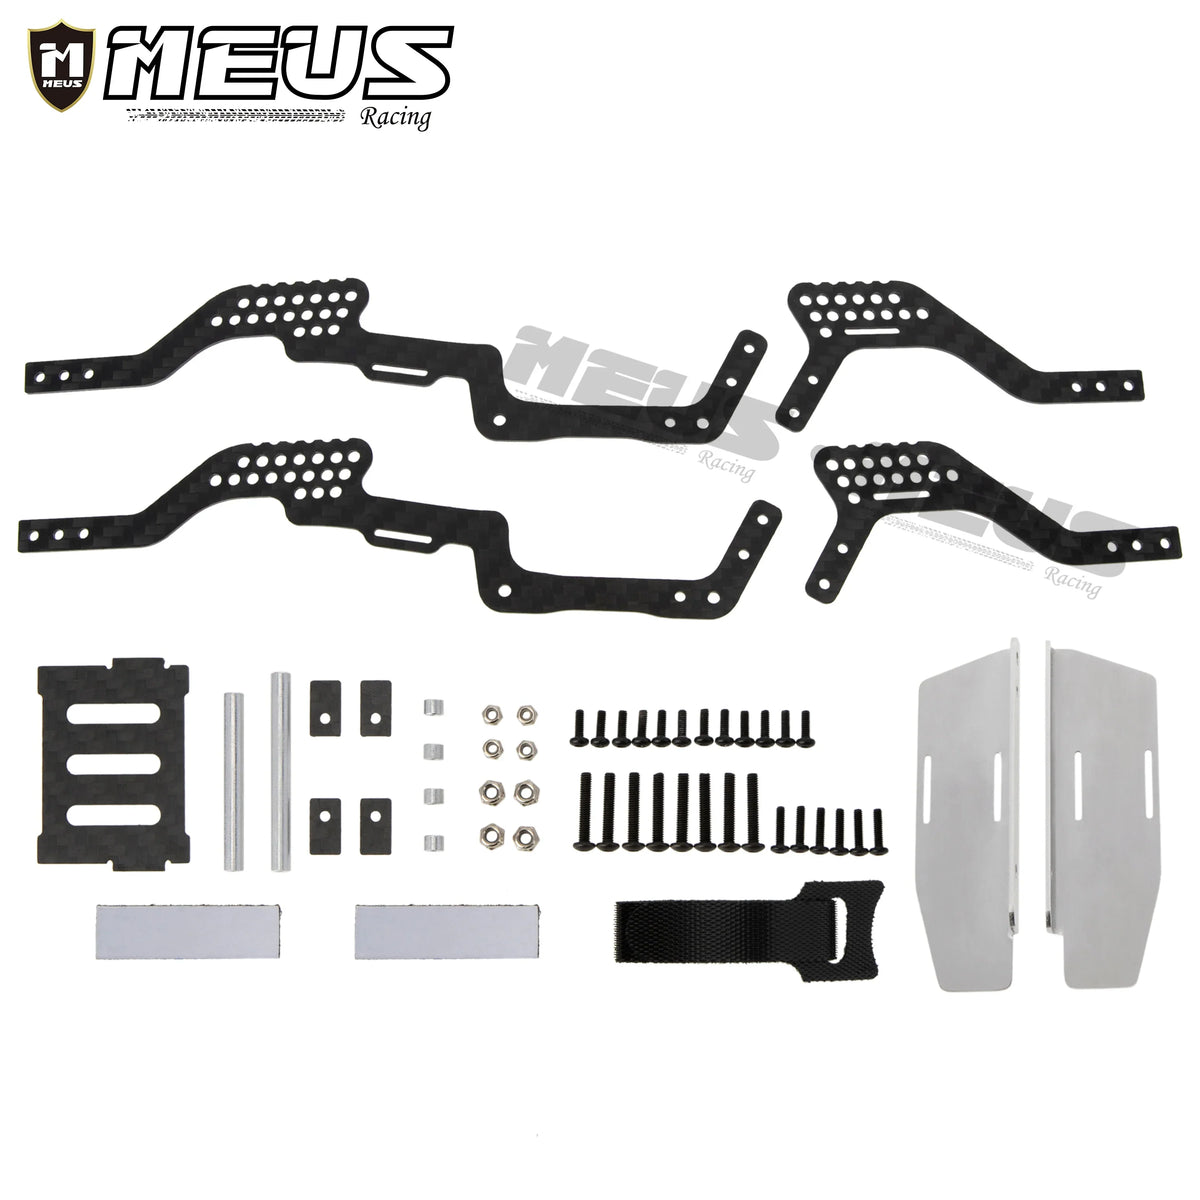 Meus Racing 1/18 RC Car Carbon Fiber LCG Chassis Frame Girder for TRAXAS TRX-4M 1/18 RC Crawler Car Upgrade Parts - HeliDirect